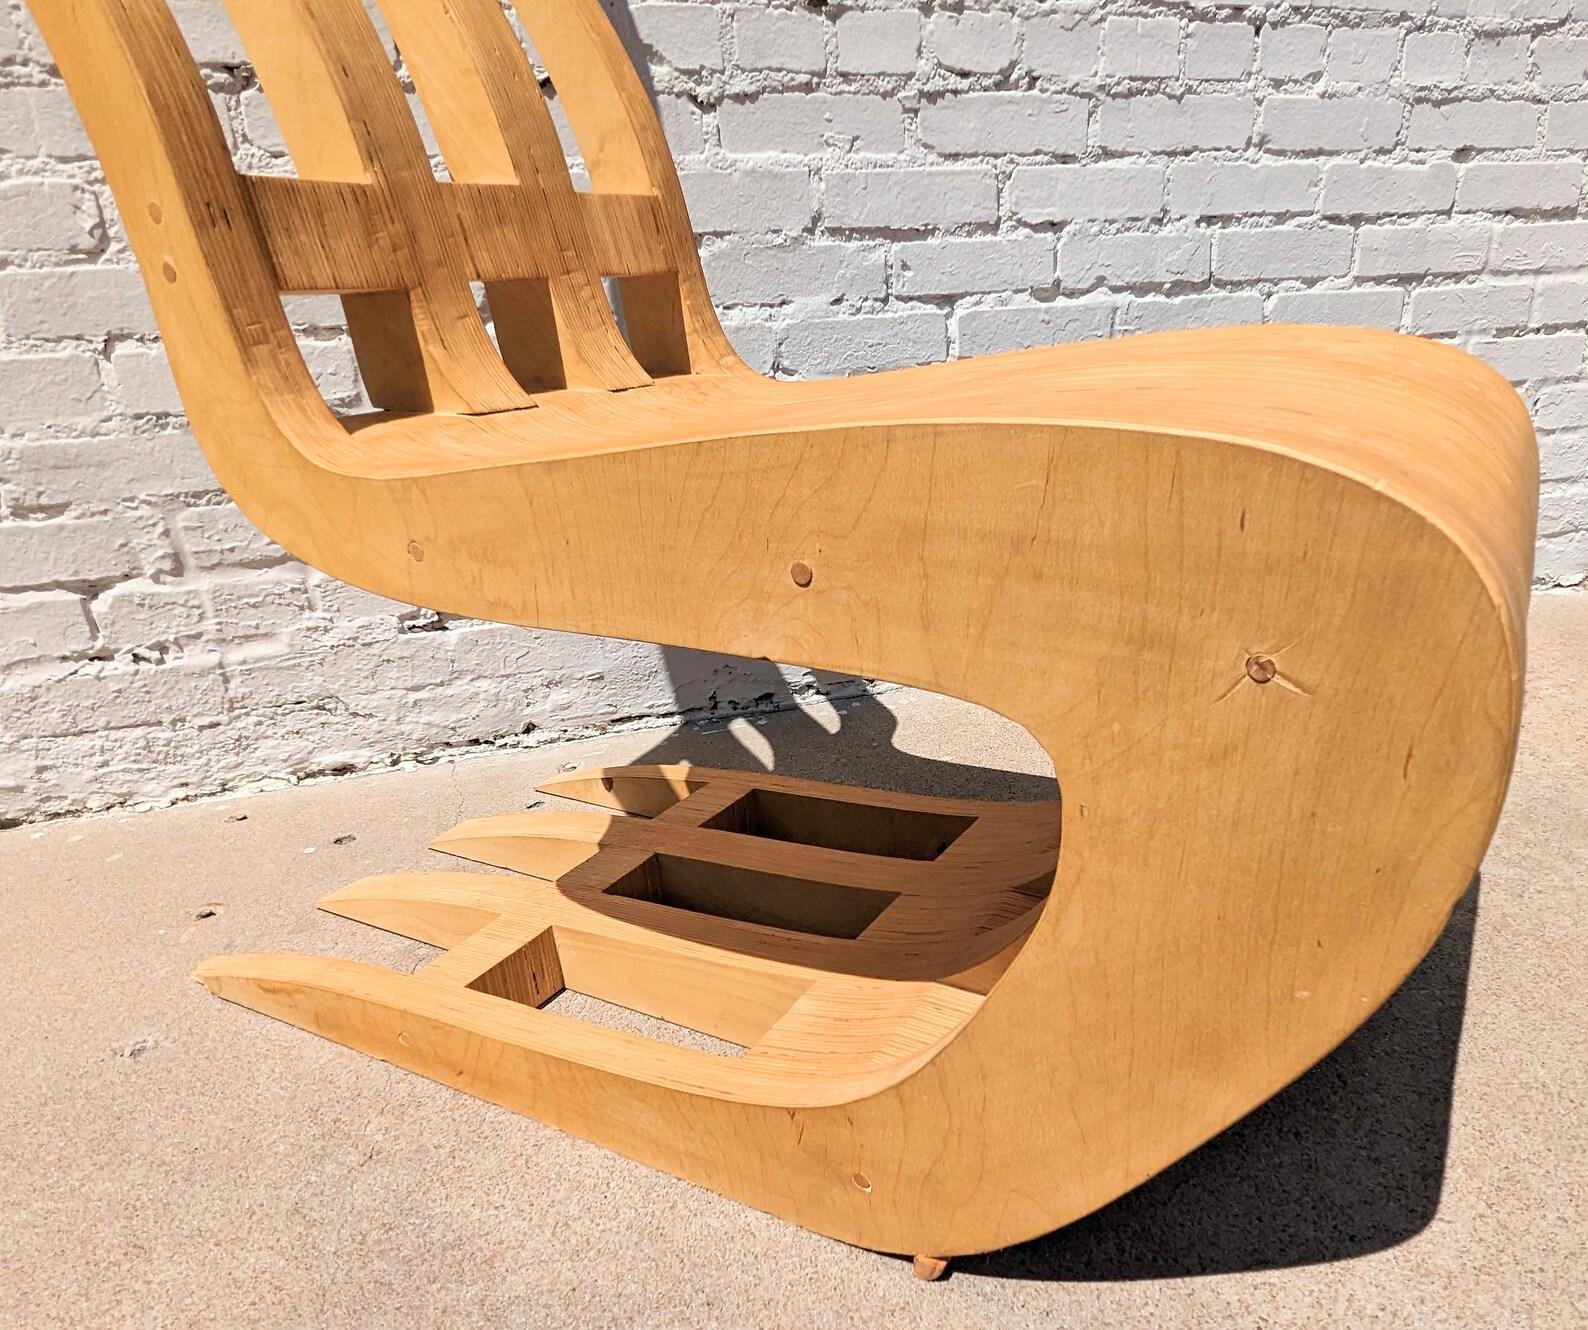 Américain Chaise en bois courbé de style The Modernity, construite sur mesure en vente